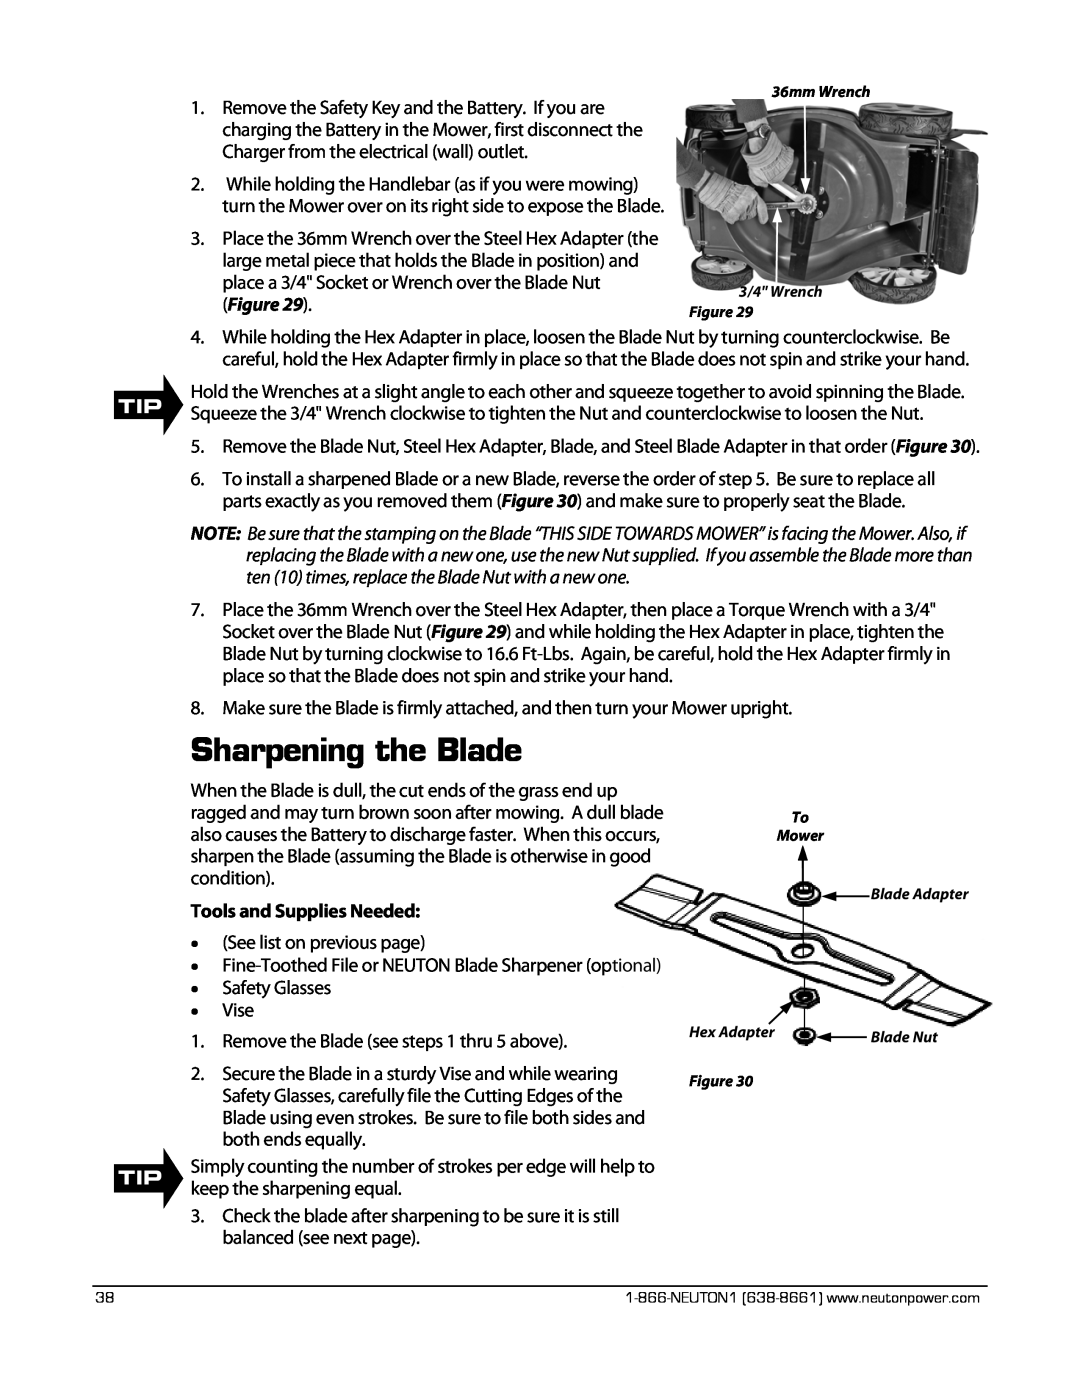 Neuton CE 6.2 manual Sharpening the Blade 